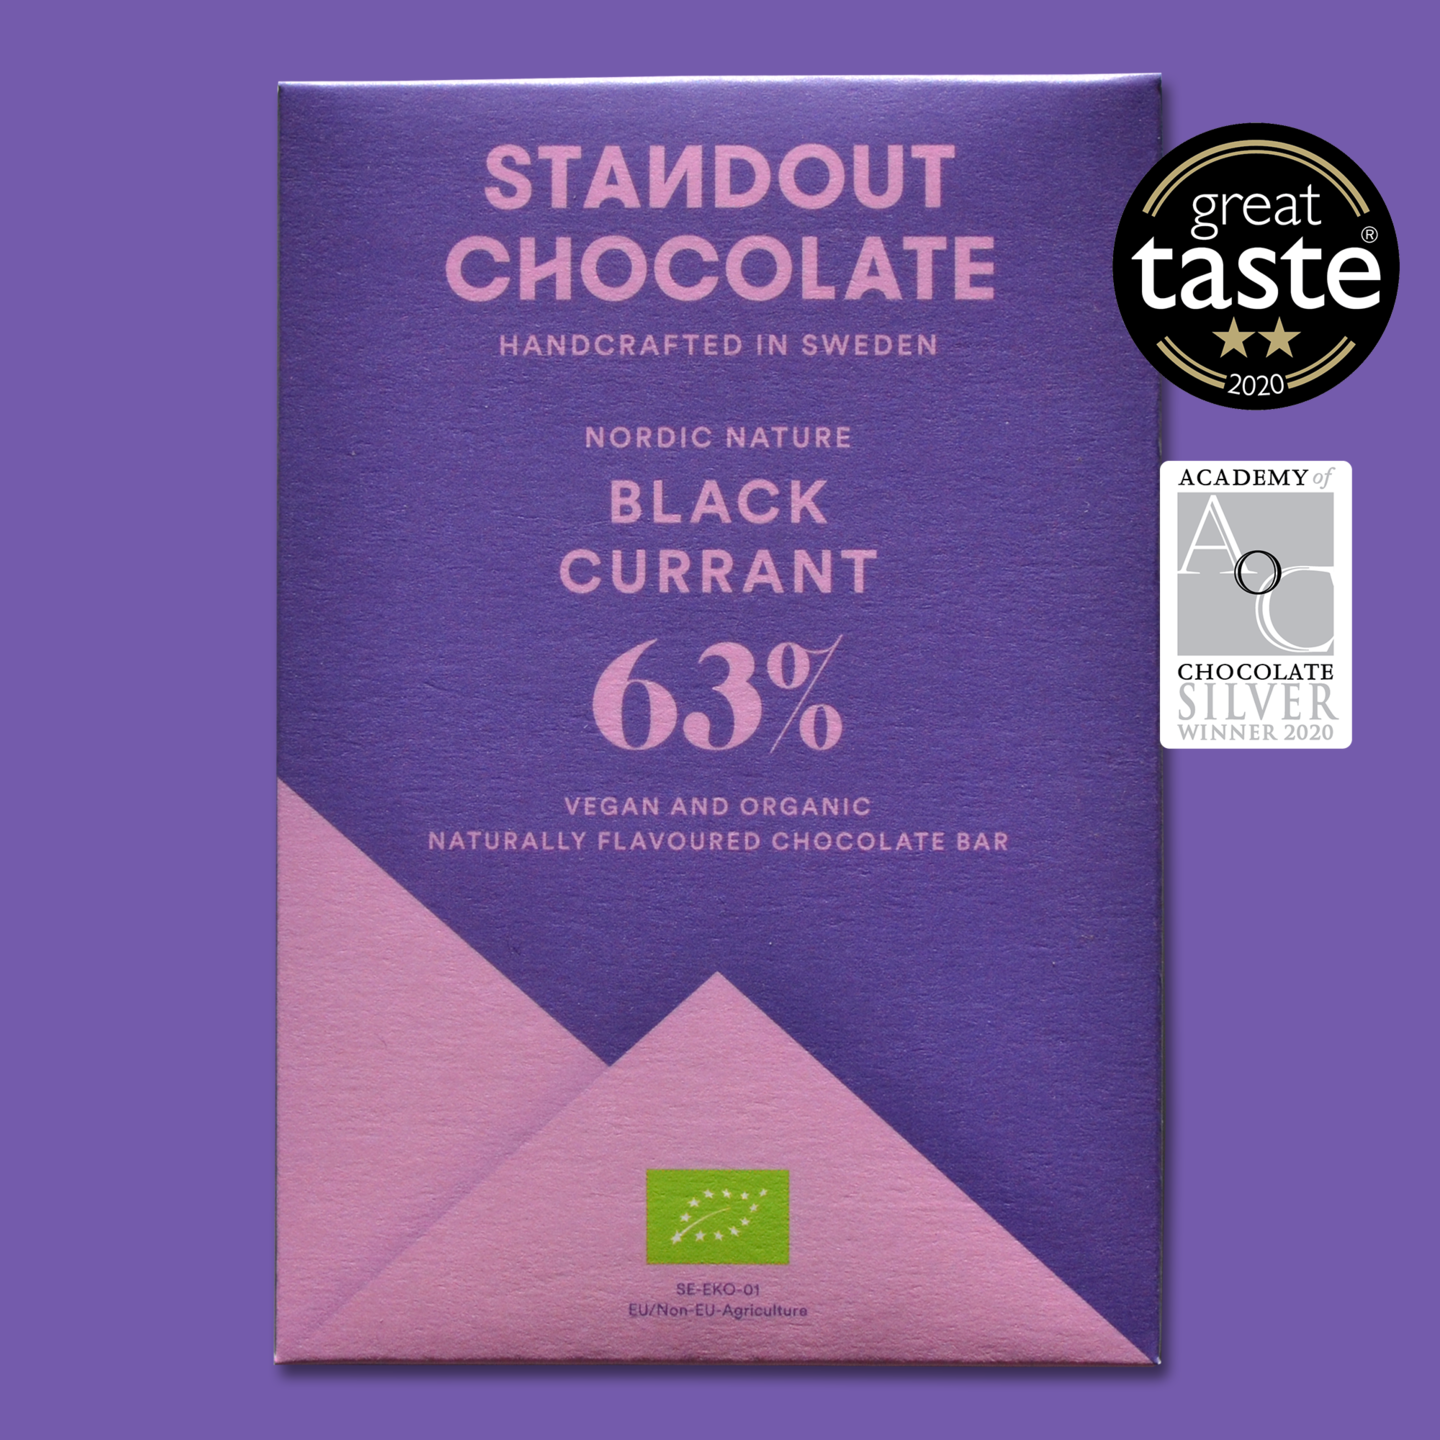 STANDOUT CHOCOLATE | Dunkle Schokolade & Johannisbeere Nordic Nature »Black Currant« 63% | 50g